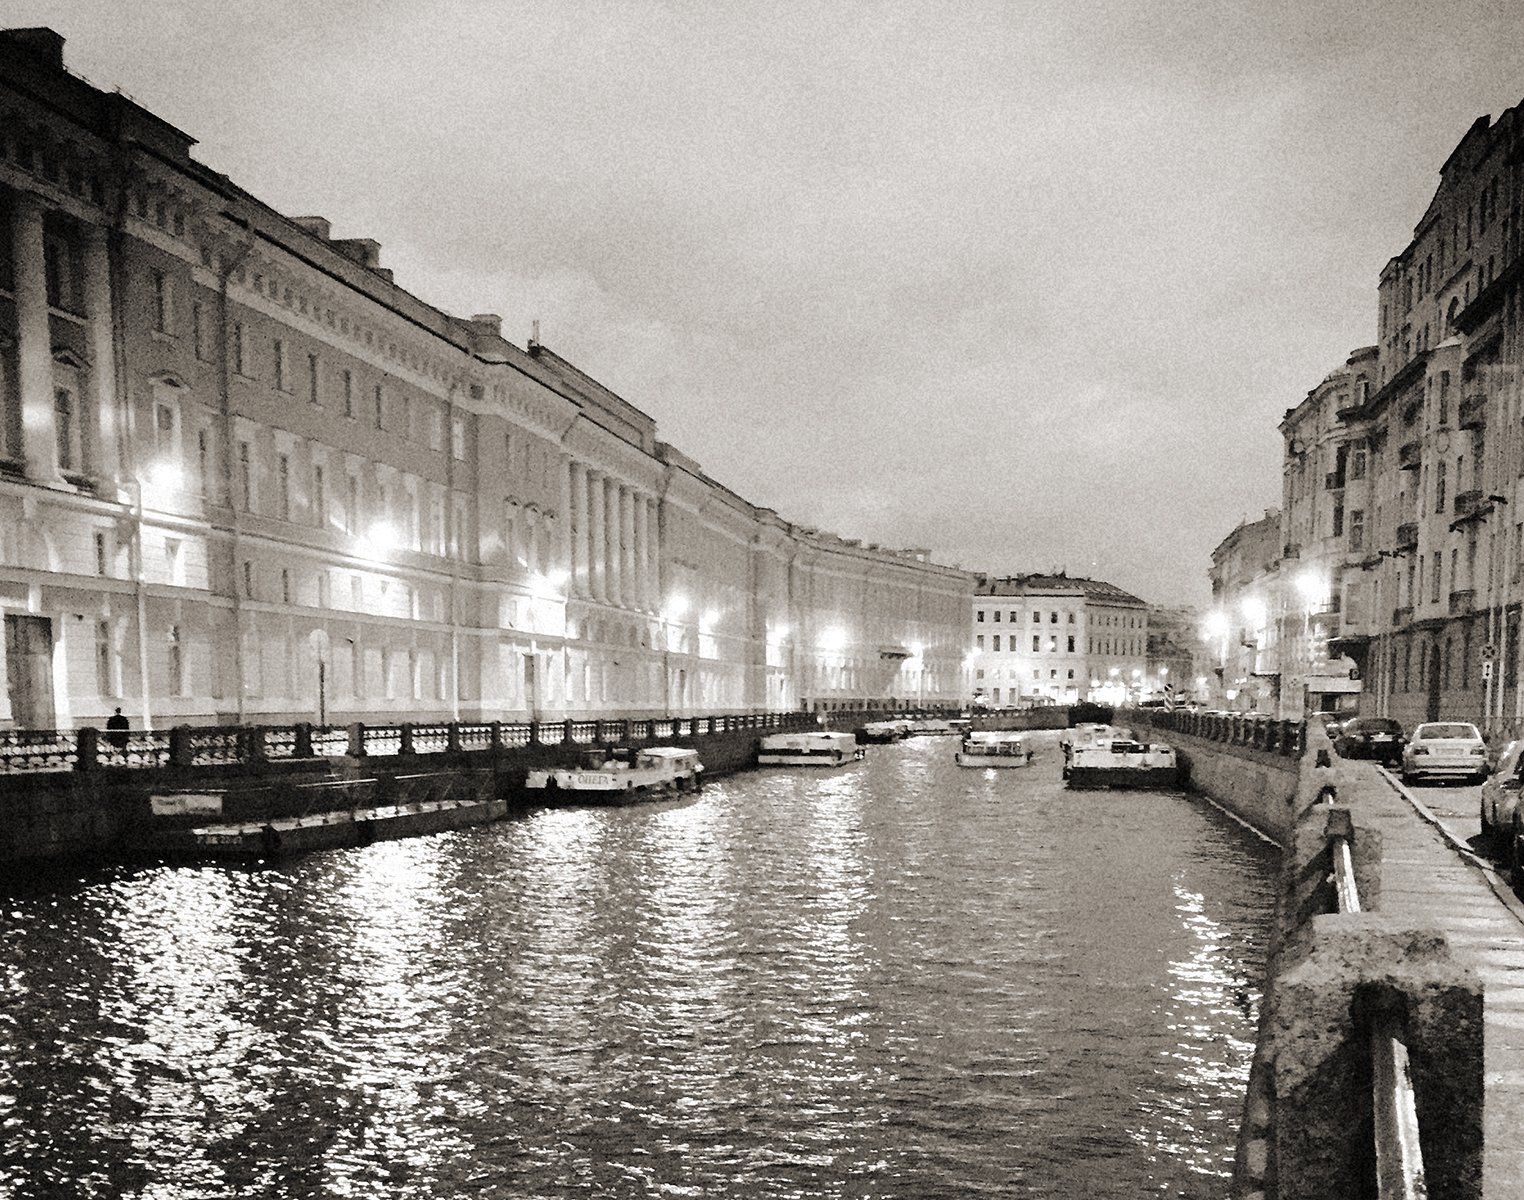  Mokka Canal, St Petersburg 